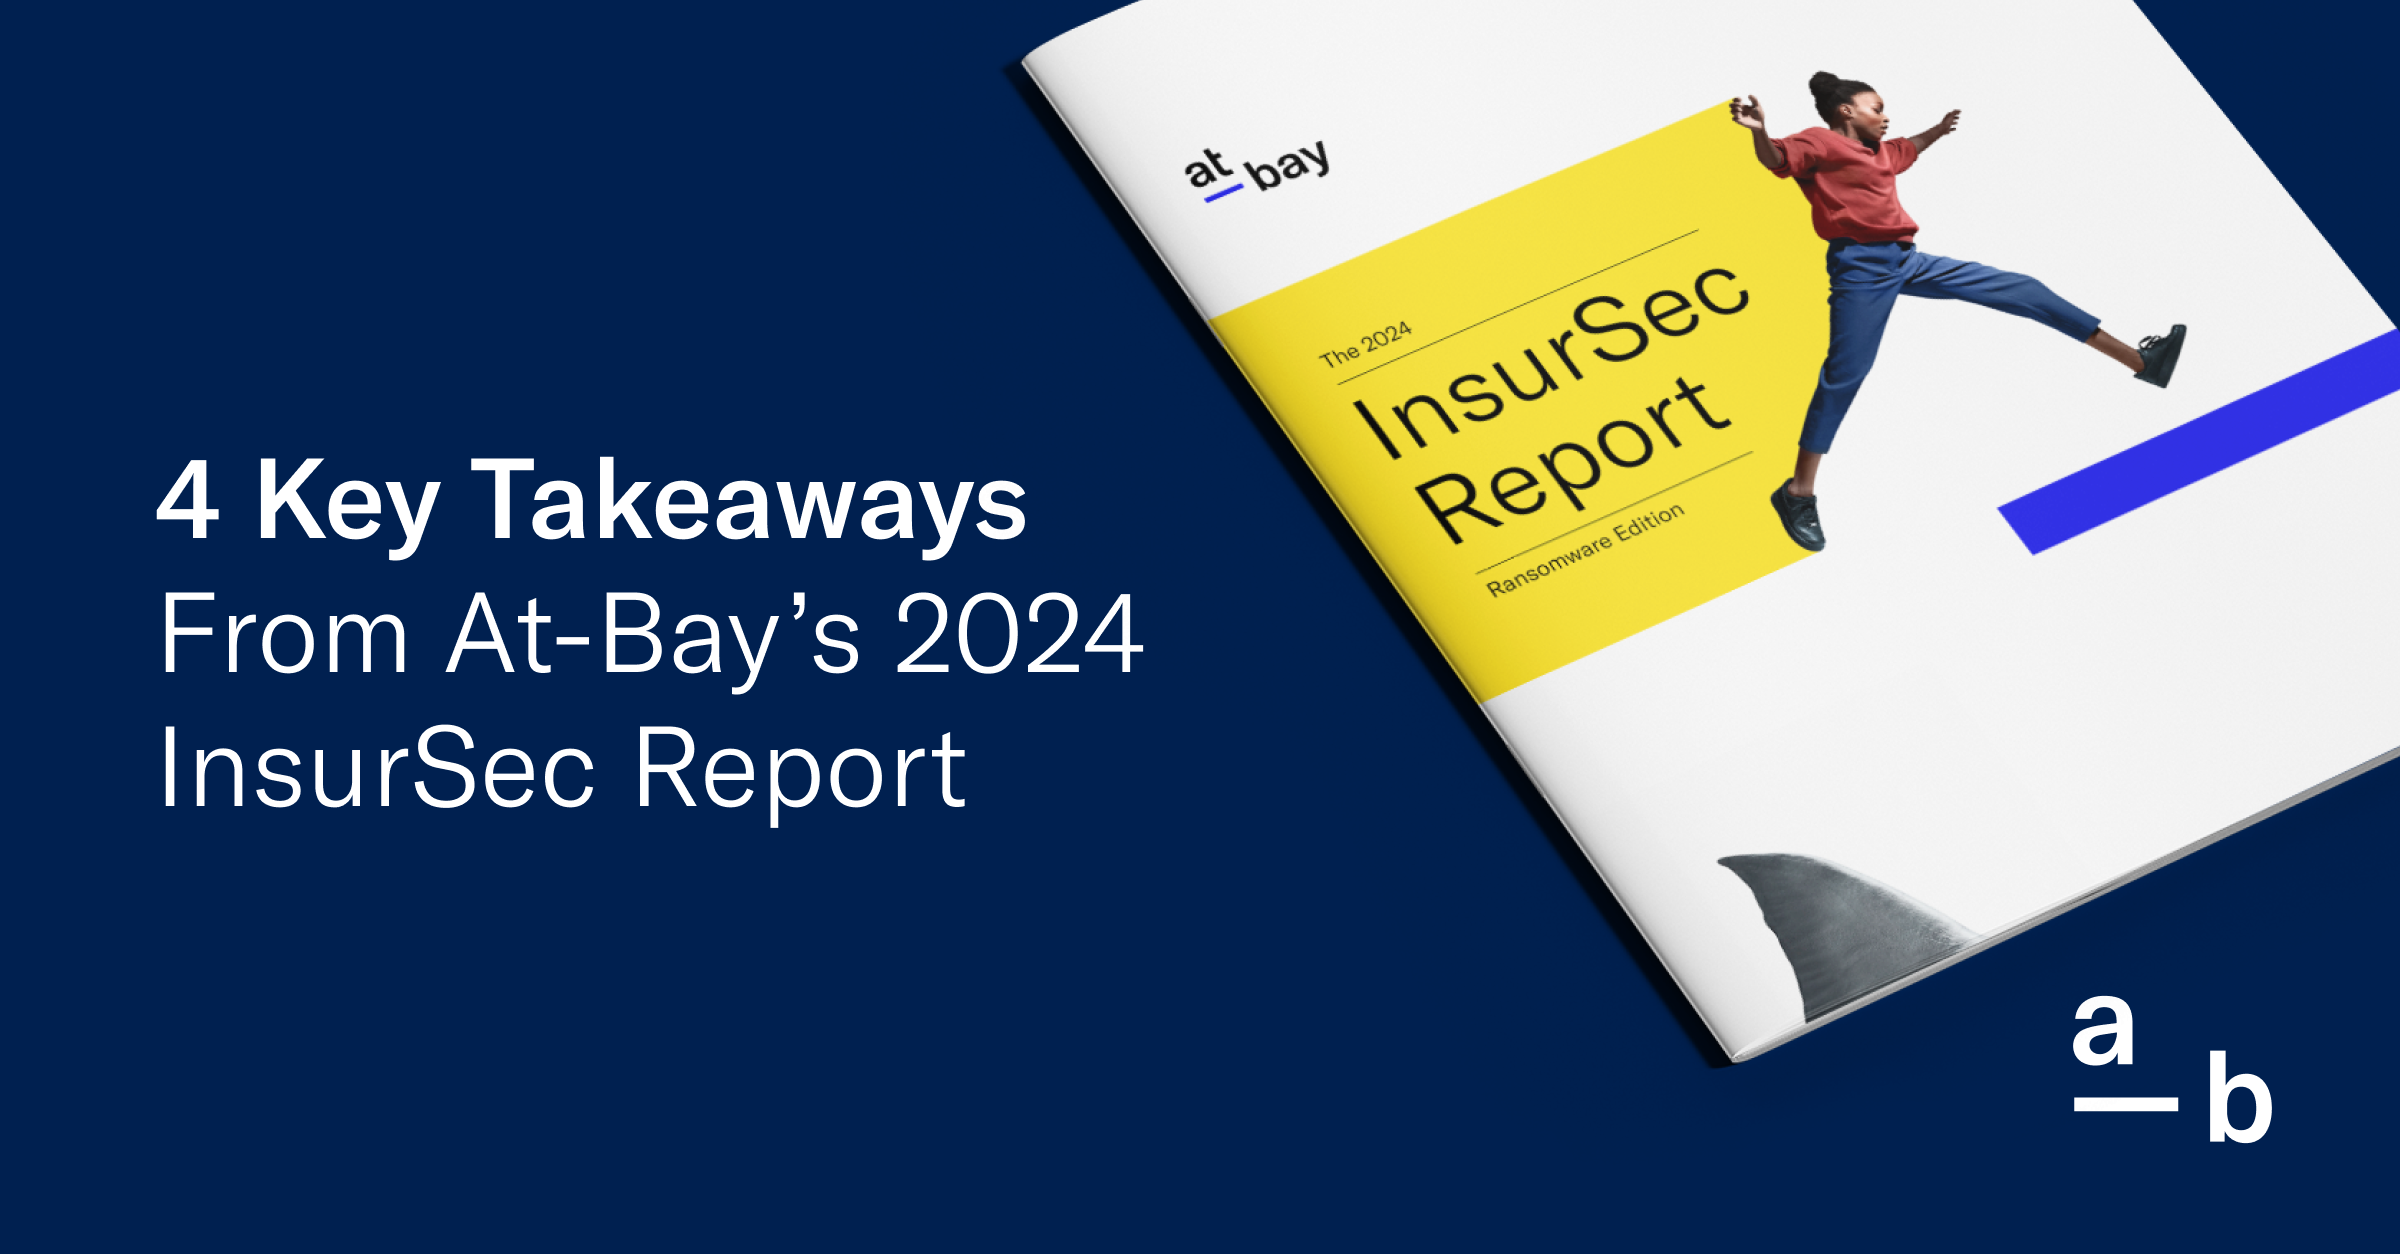 4 Key Takeaways From At-Bay’s 2024 InsurSec Report